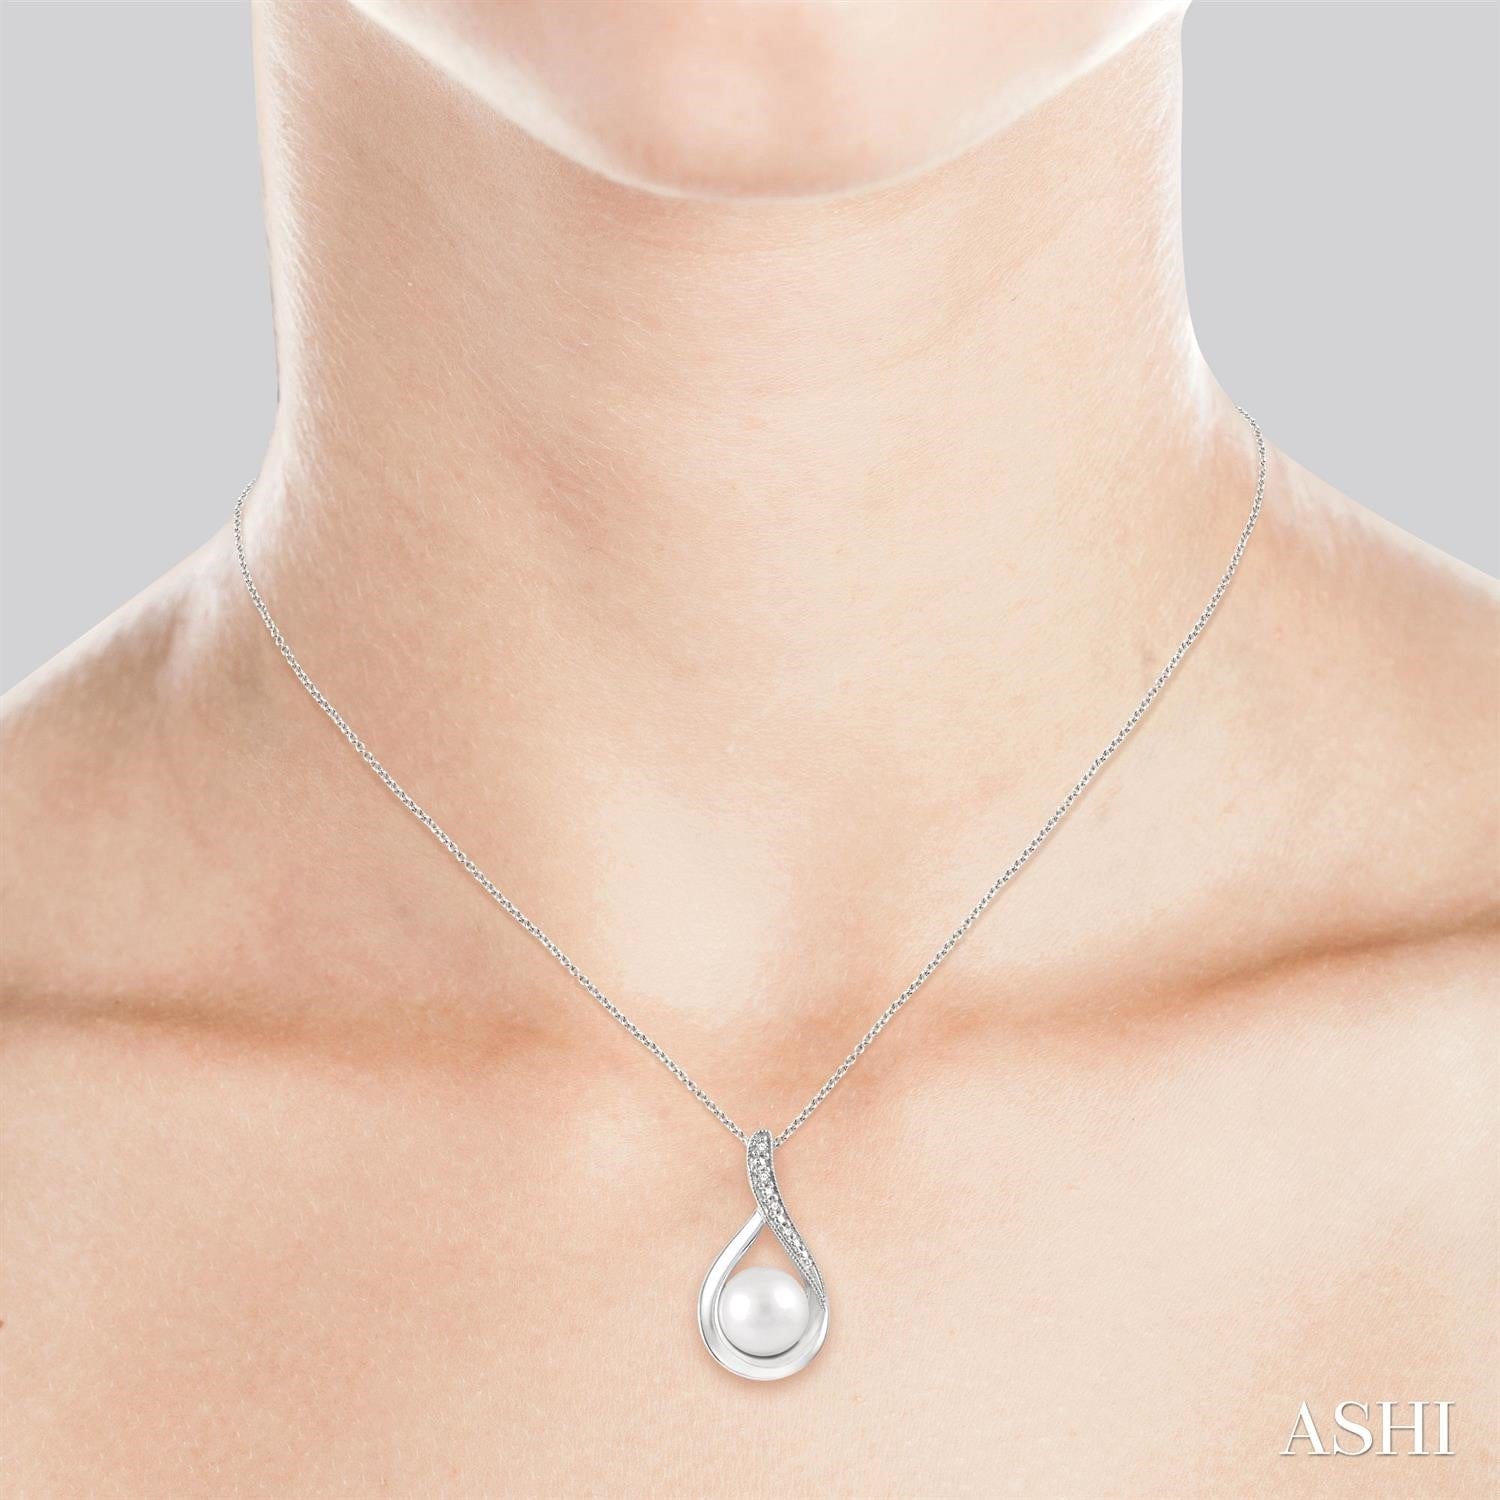 Ashi Necklaces and Pendants Silver Pearl & Diamond Pendant